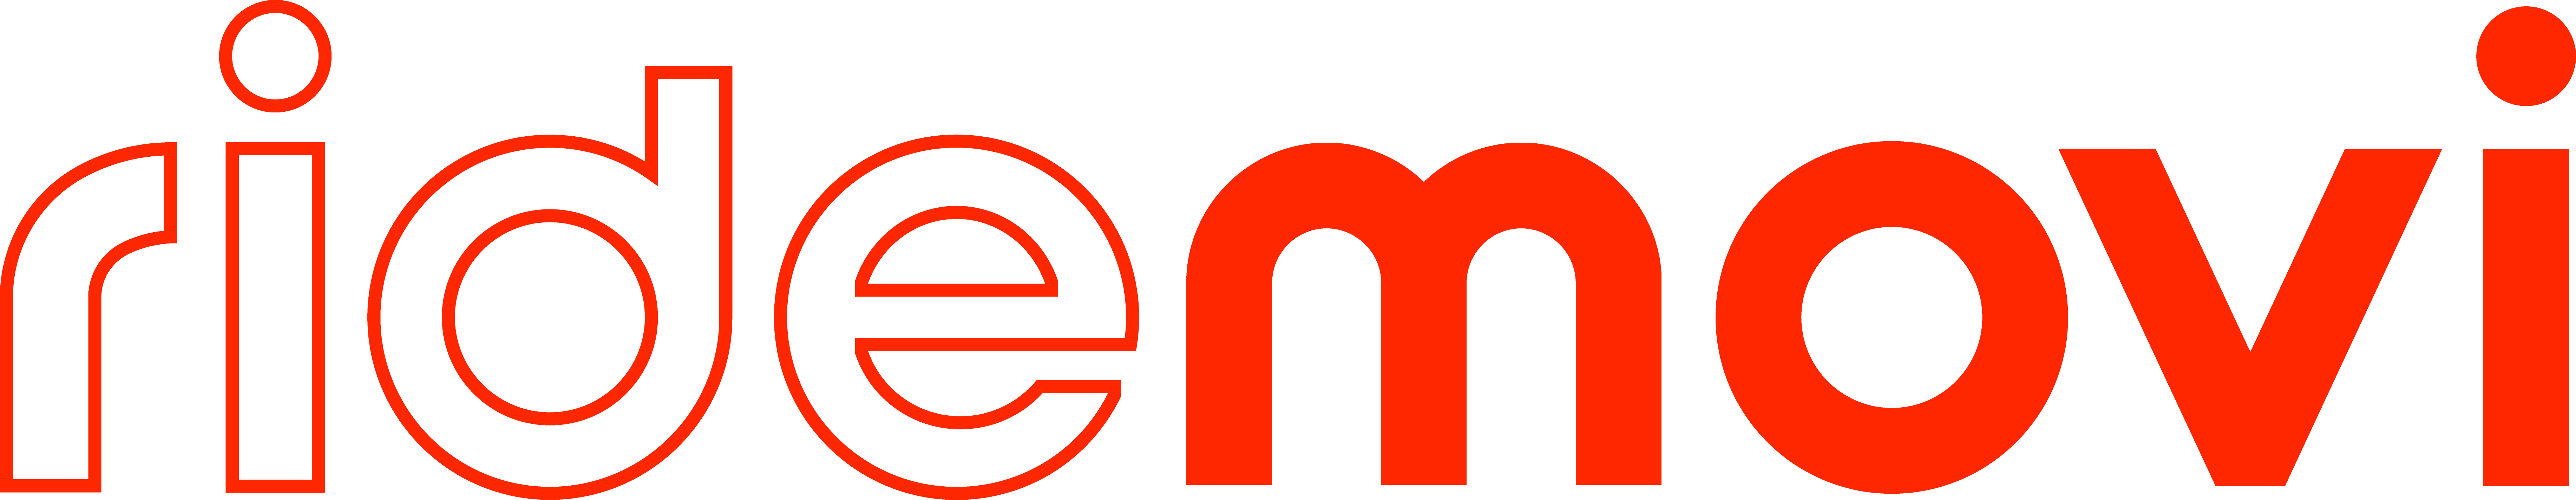 RM_logo_orange_CMYK